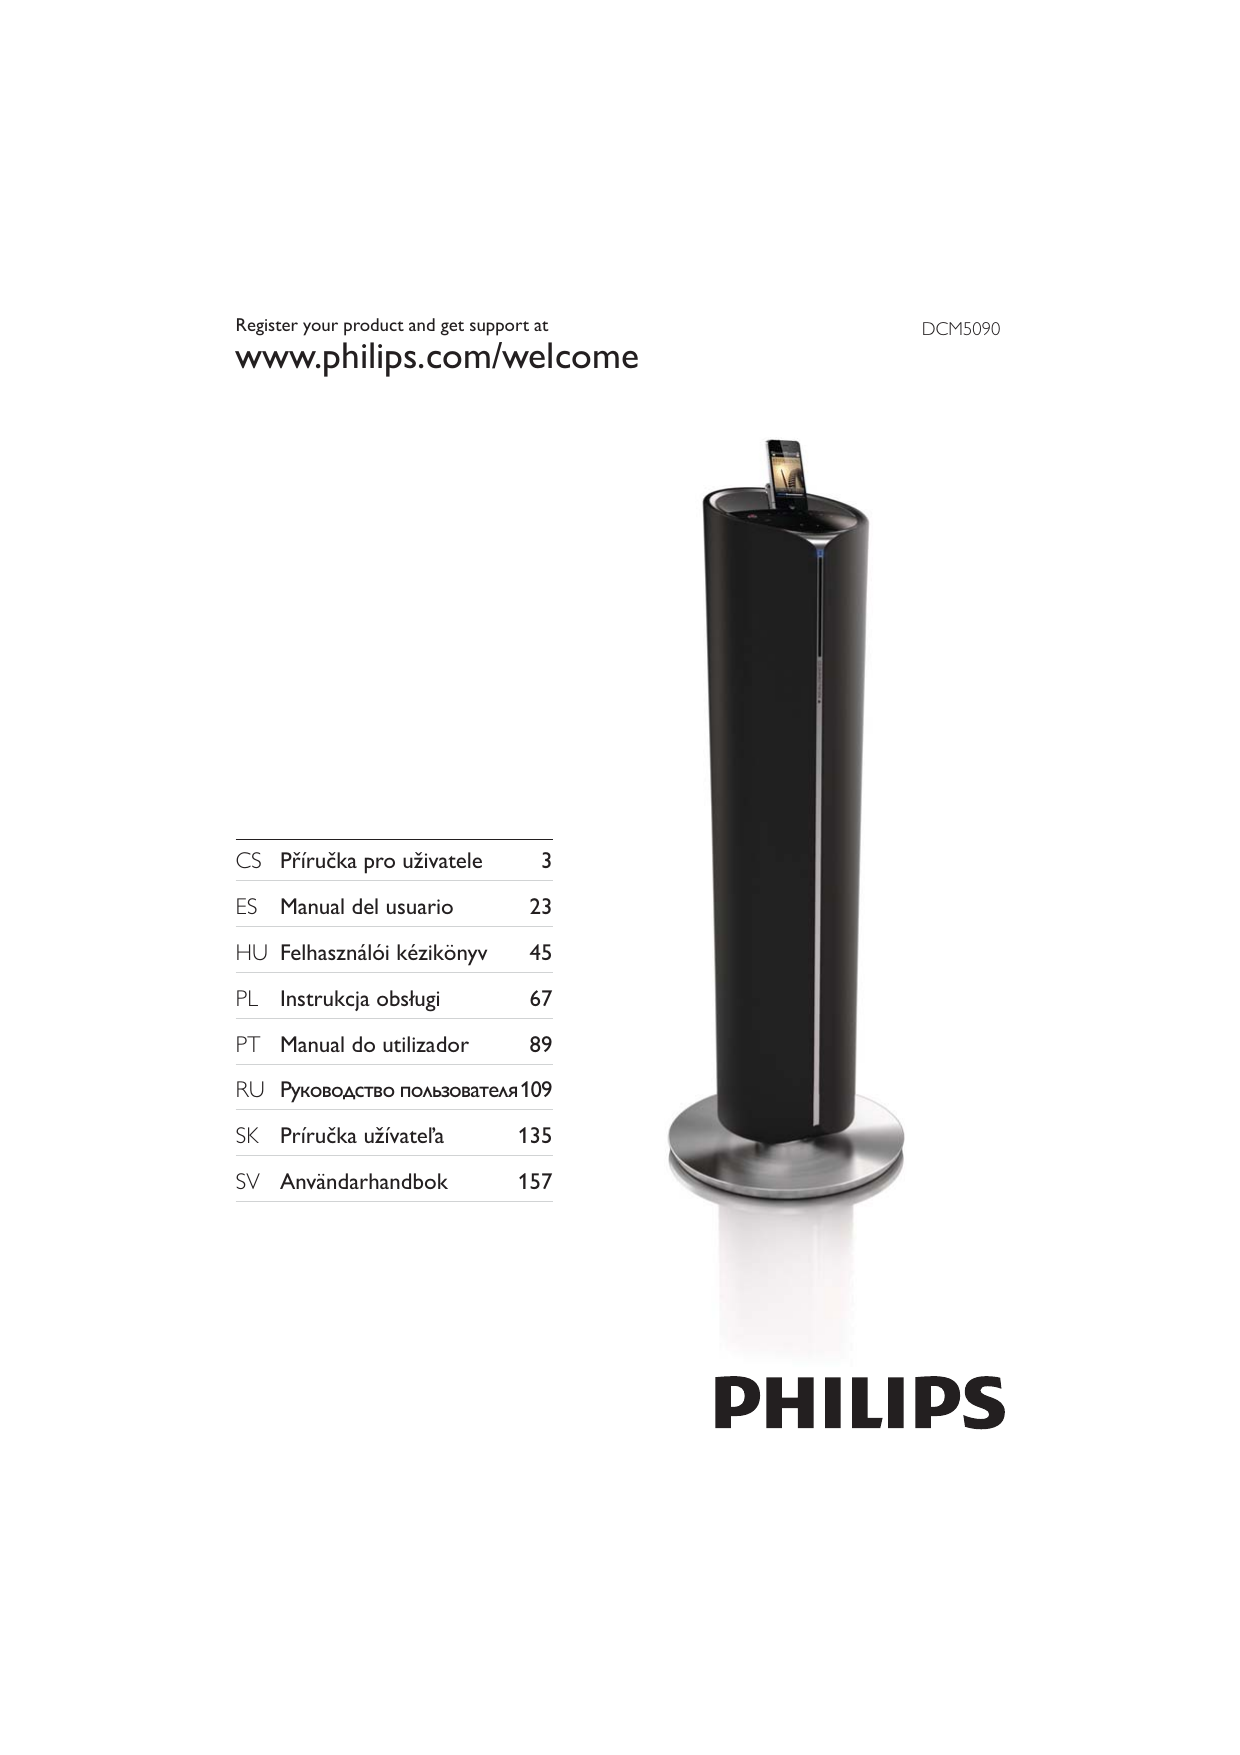 Philips Dcm5090 10 User Manual Manualzz